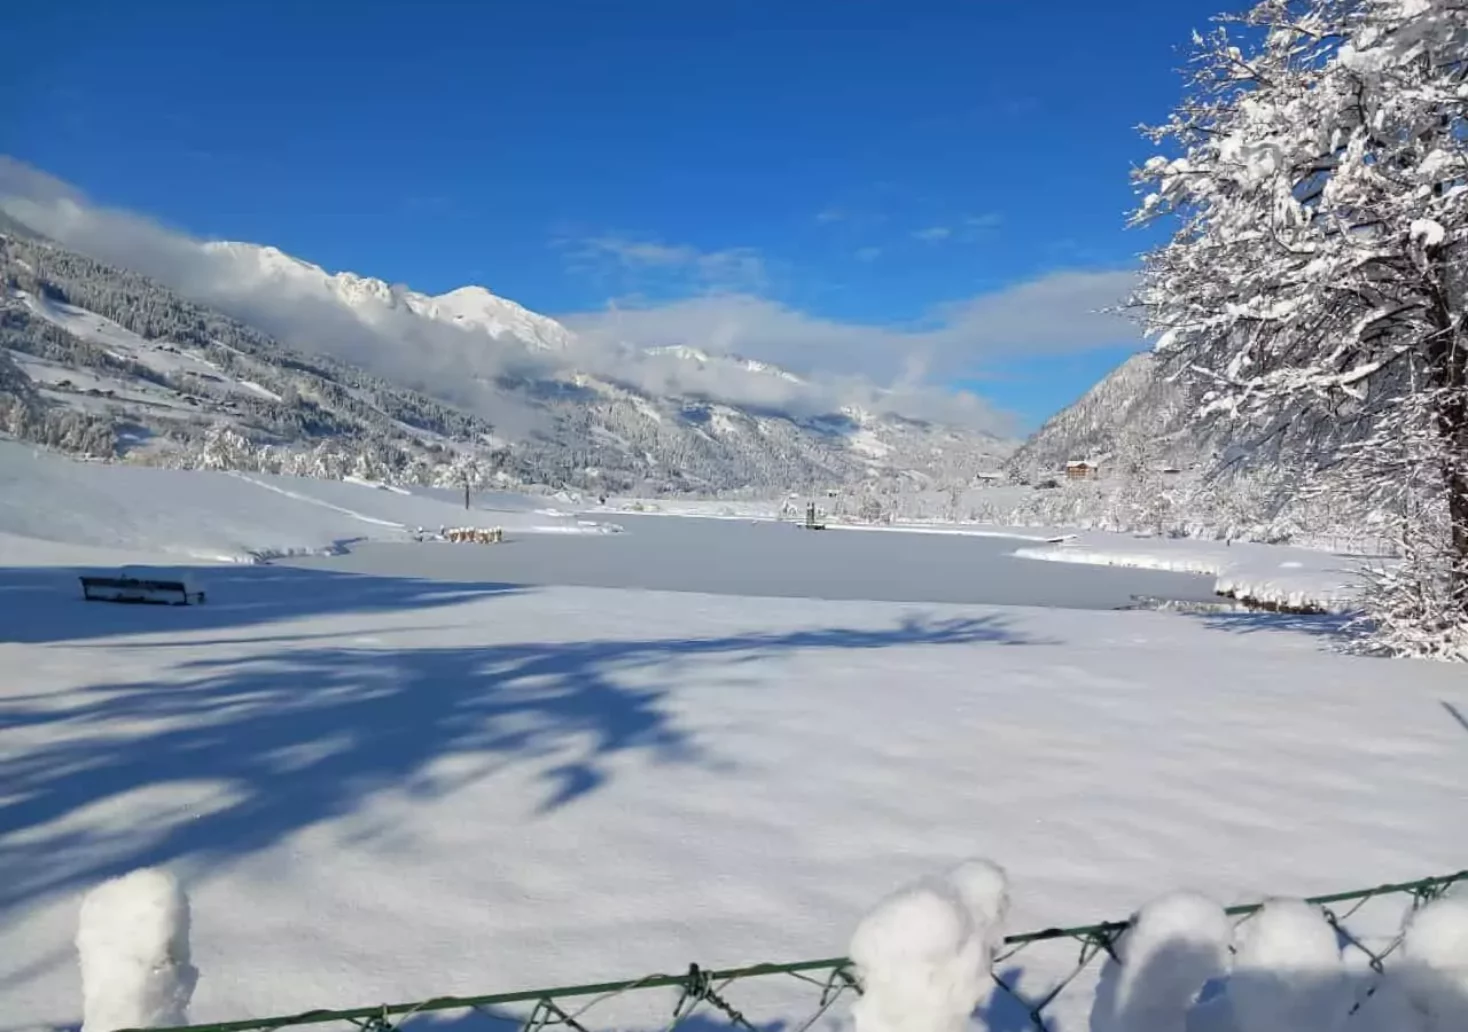 Photo from 5min.at shows the snowy landscape in Bad Gastein, Salzburg.